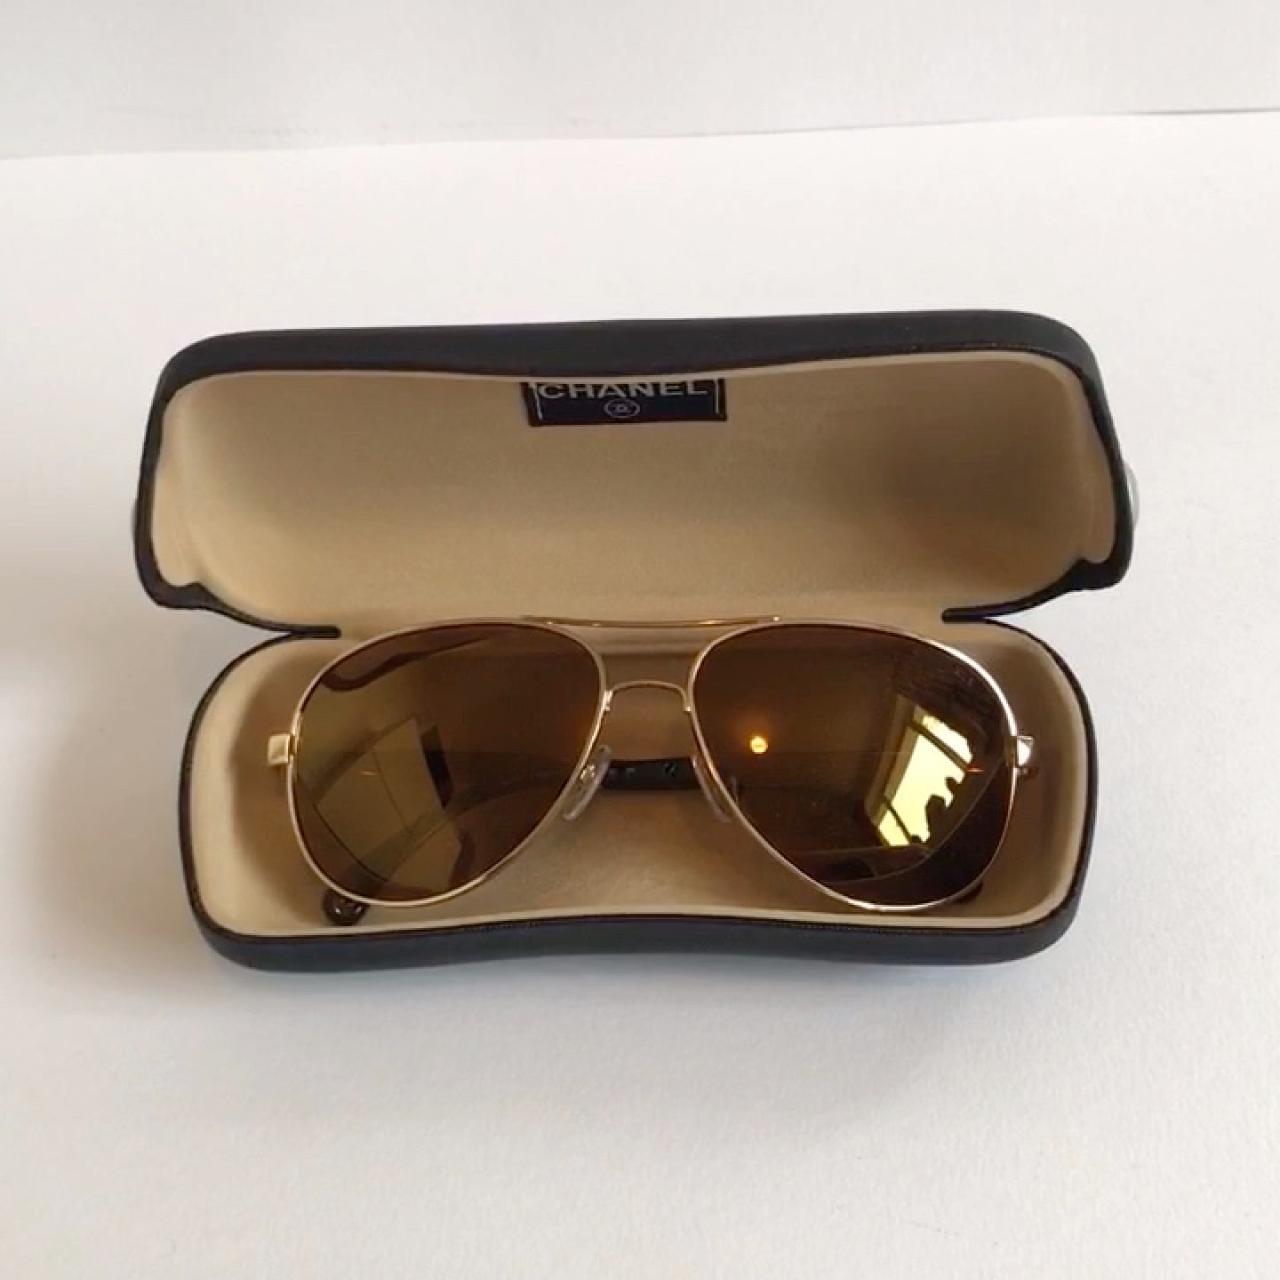 Chanel - Sunglasses - Style: Aviator - Frame: Gold - Depop